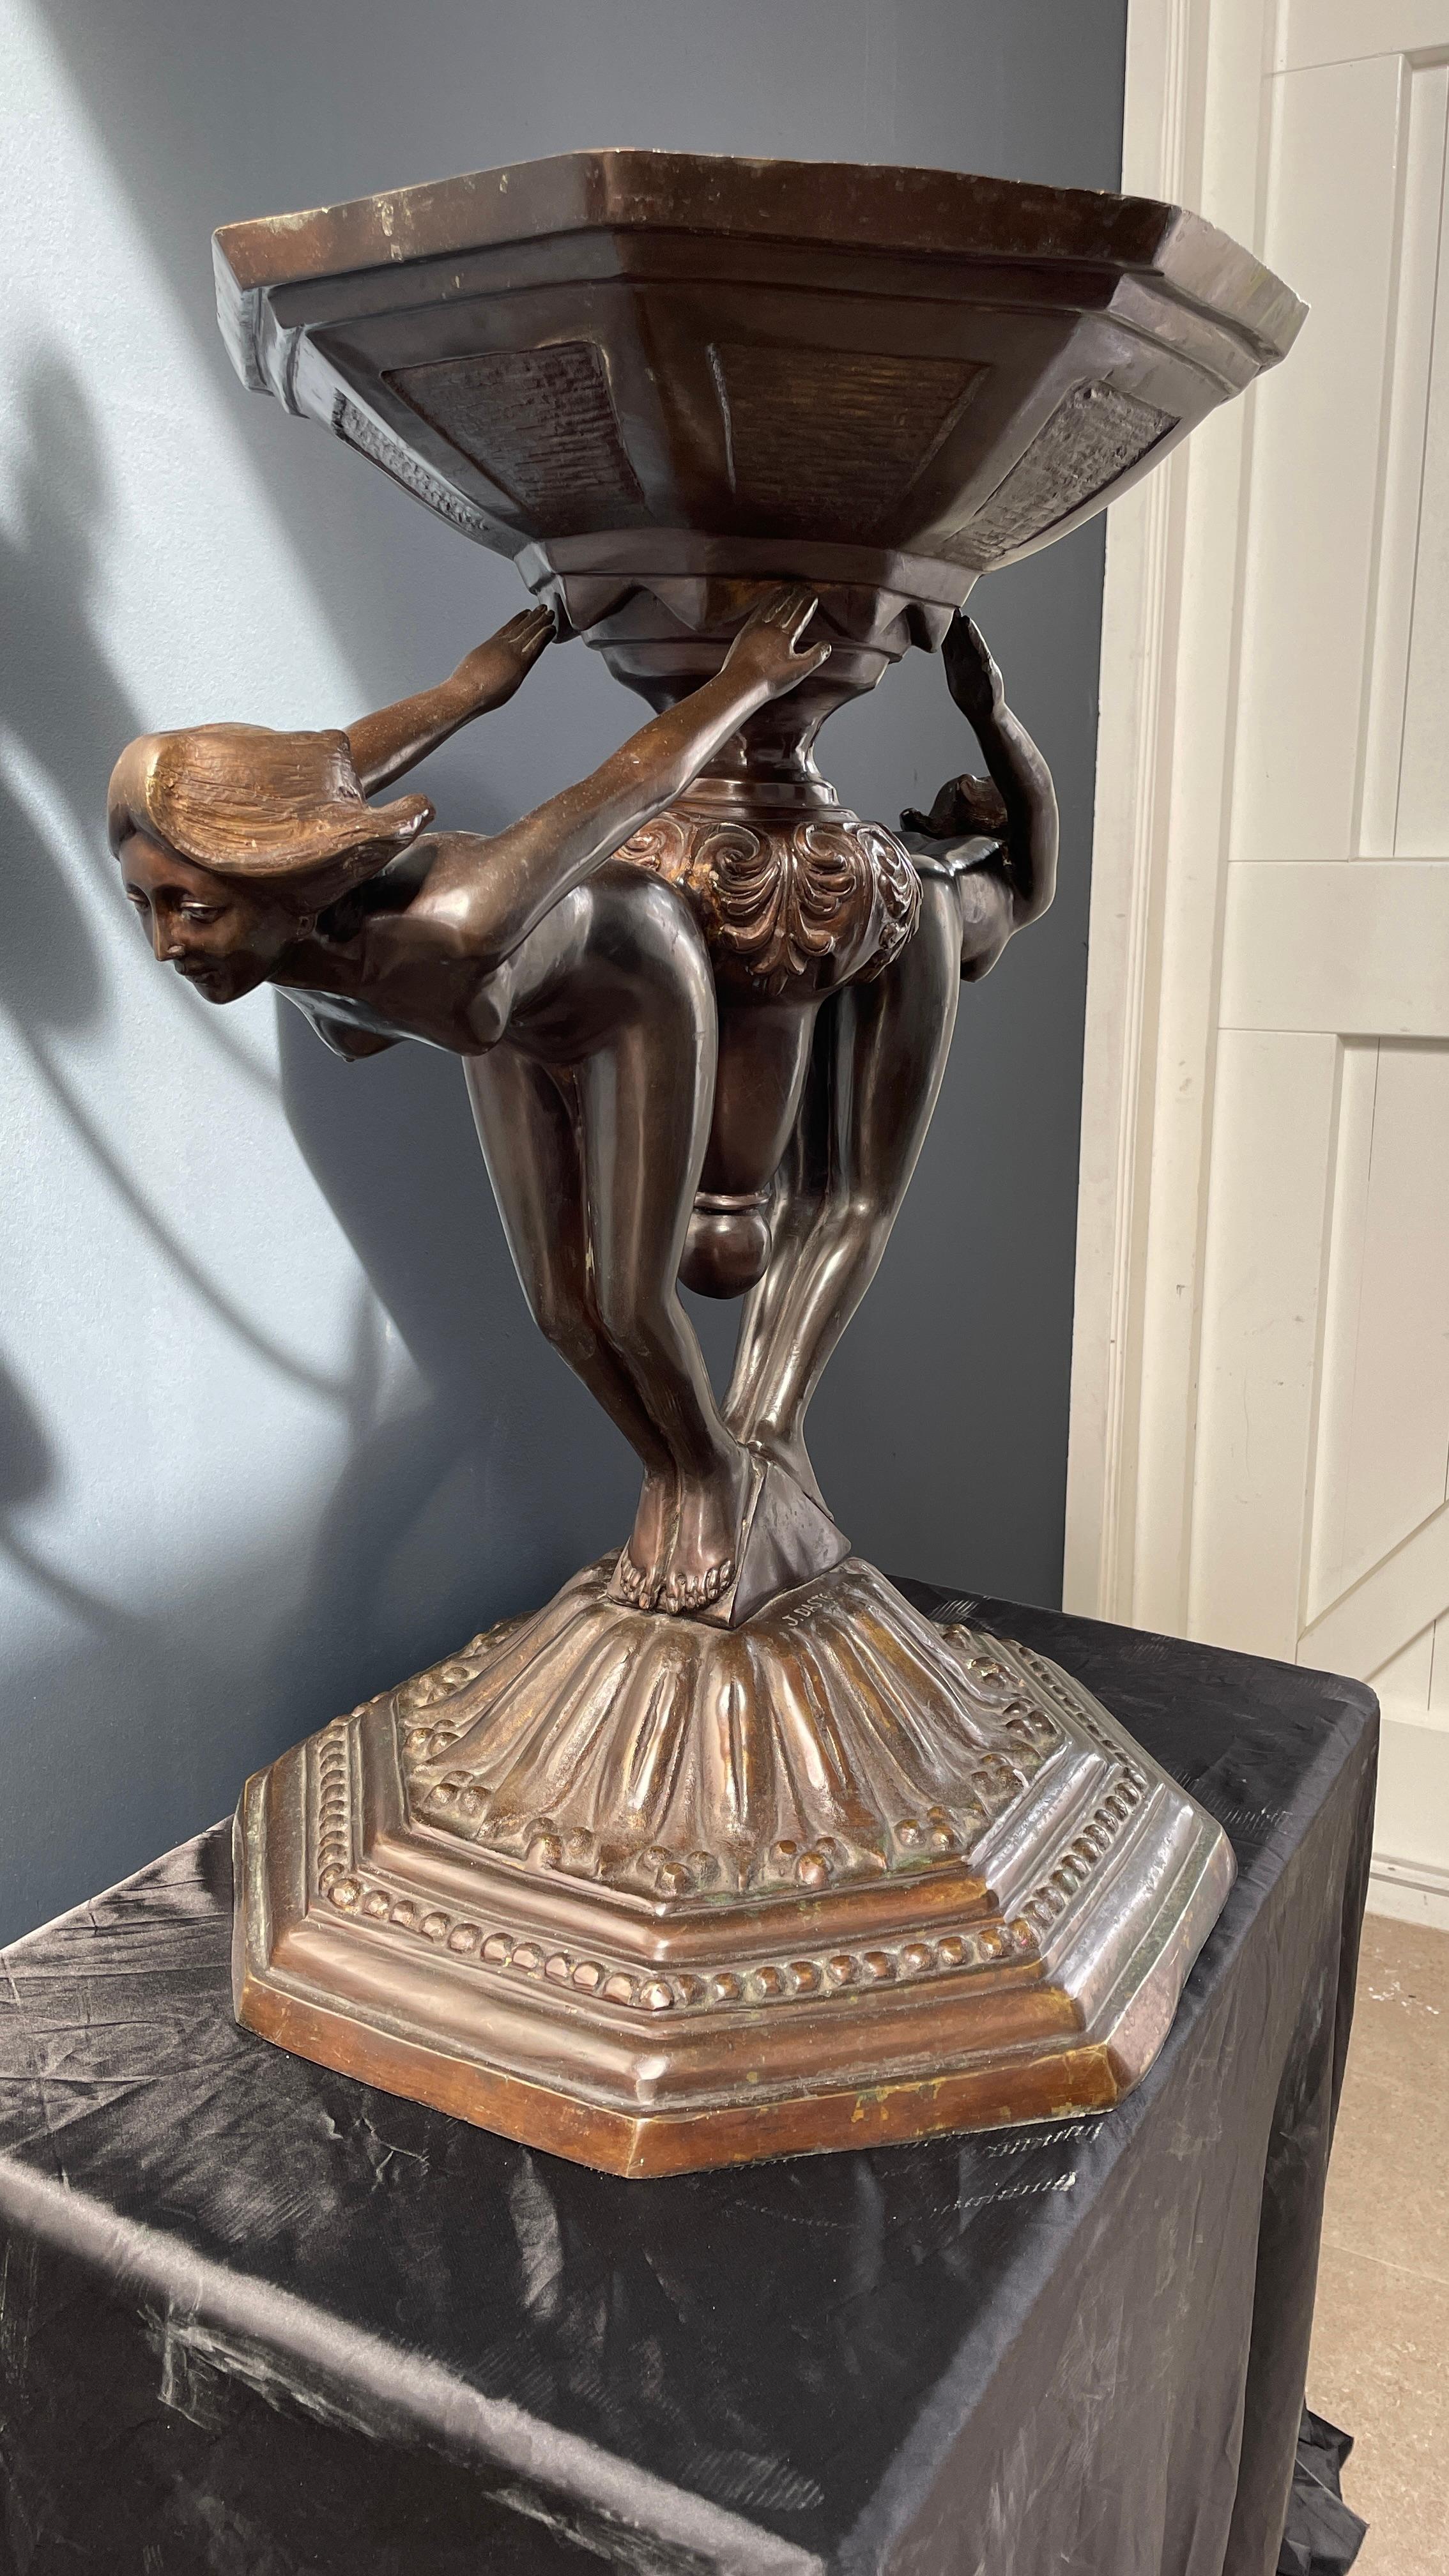 20th Century Bronze Sculpture Bird Bath by Listed Artist Joseph 'Guiseppe' d'Aste, c. 1920's For Sale